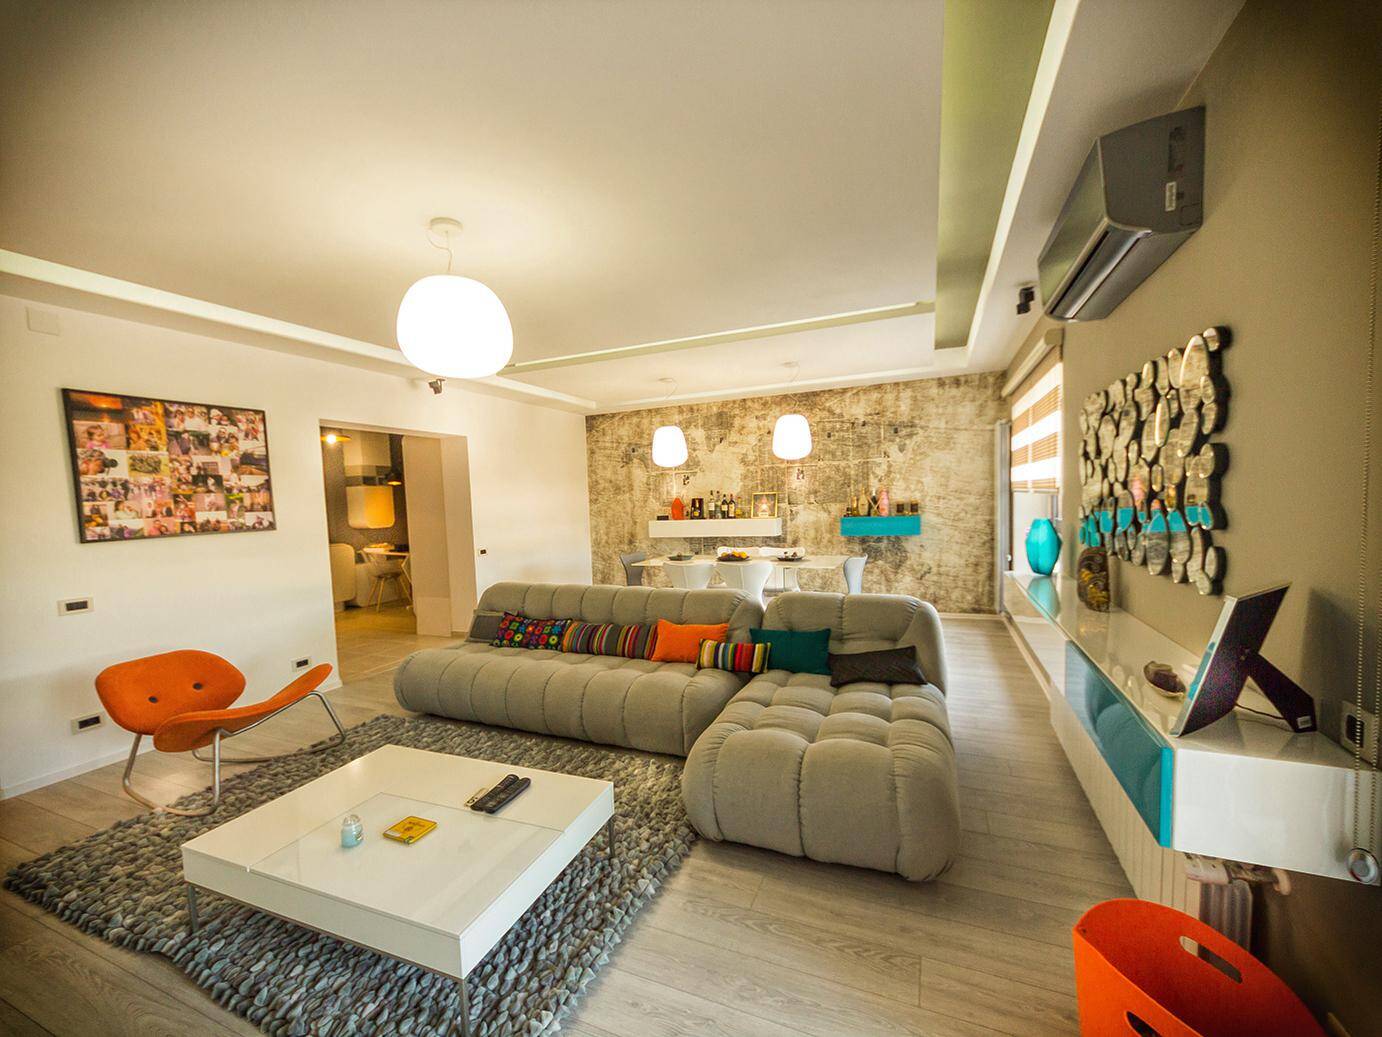 M apartment - Emerald Residence by Decorate it - HomeWorldDesign (5)